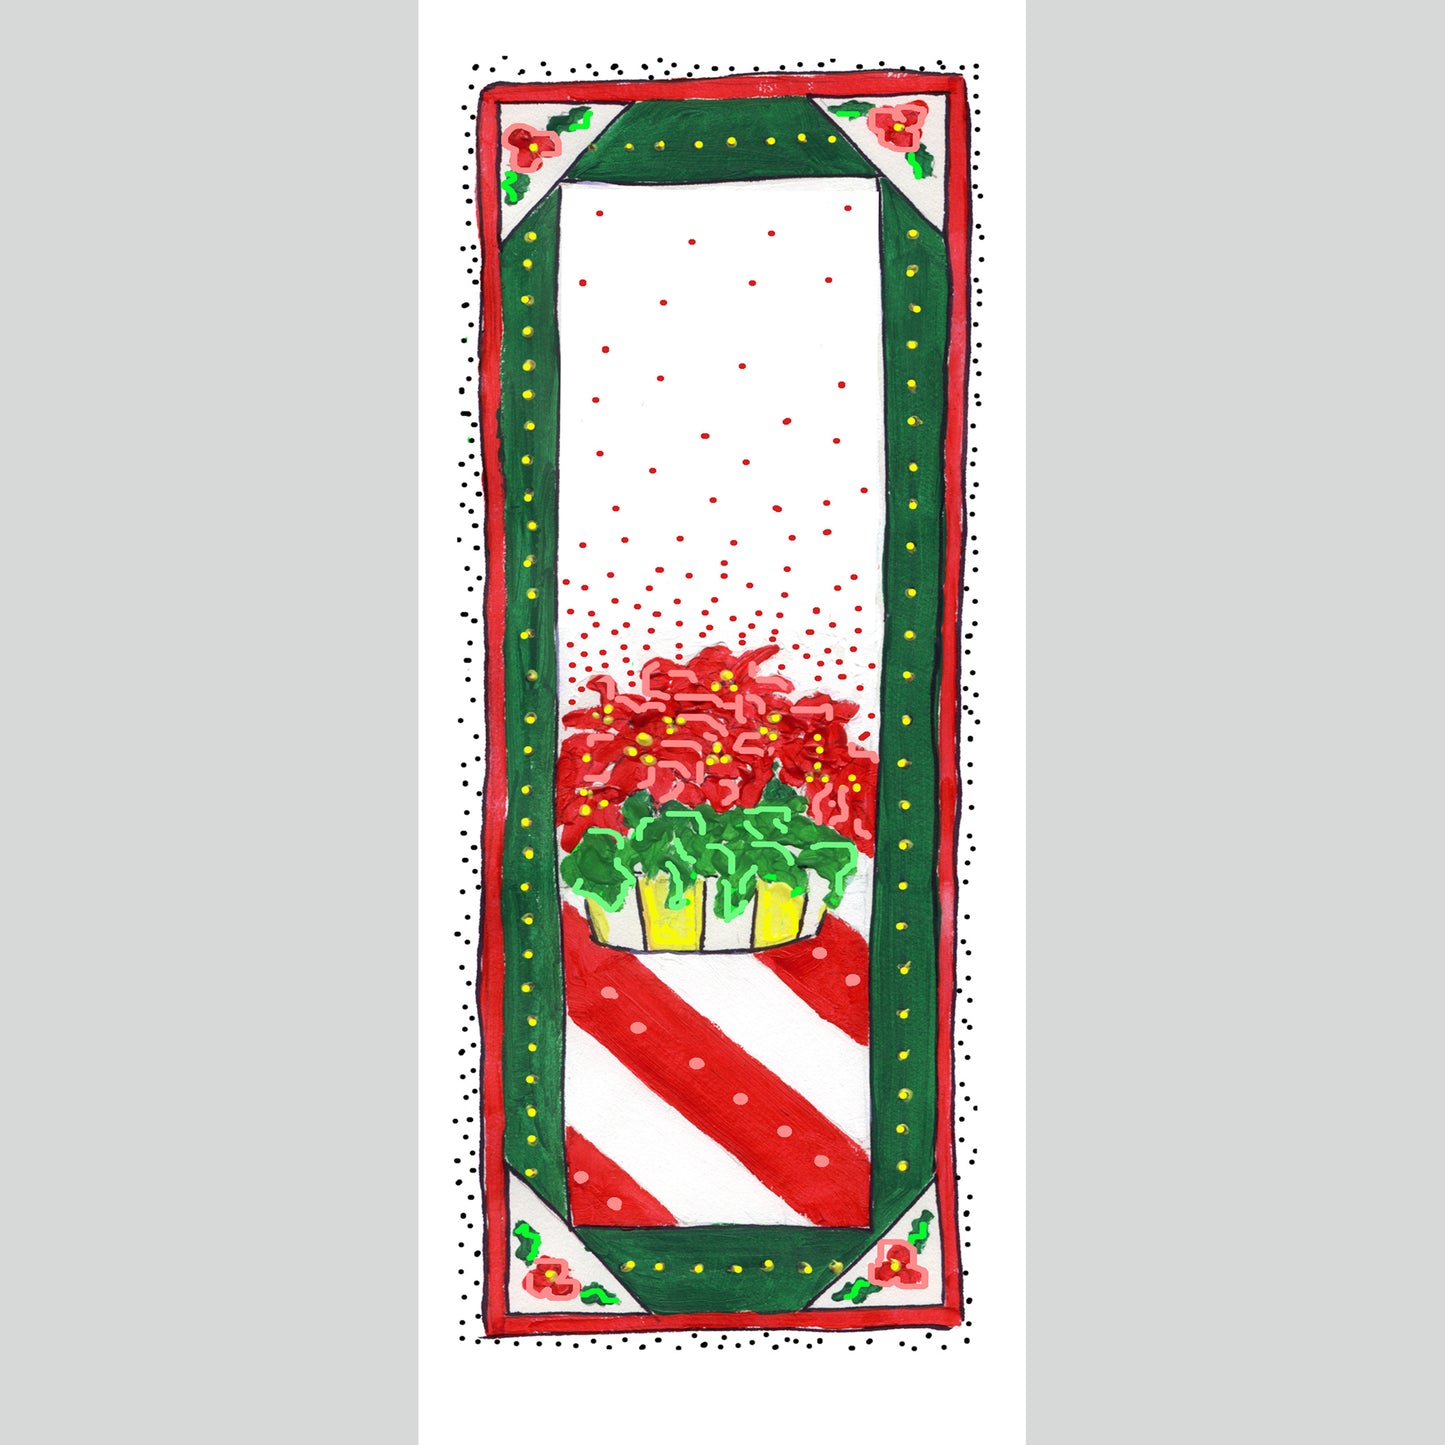 A Very Merry Christmas - Poinsettia Note Card (Single Card)